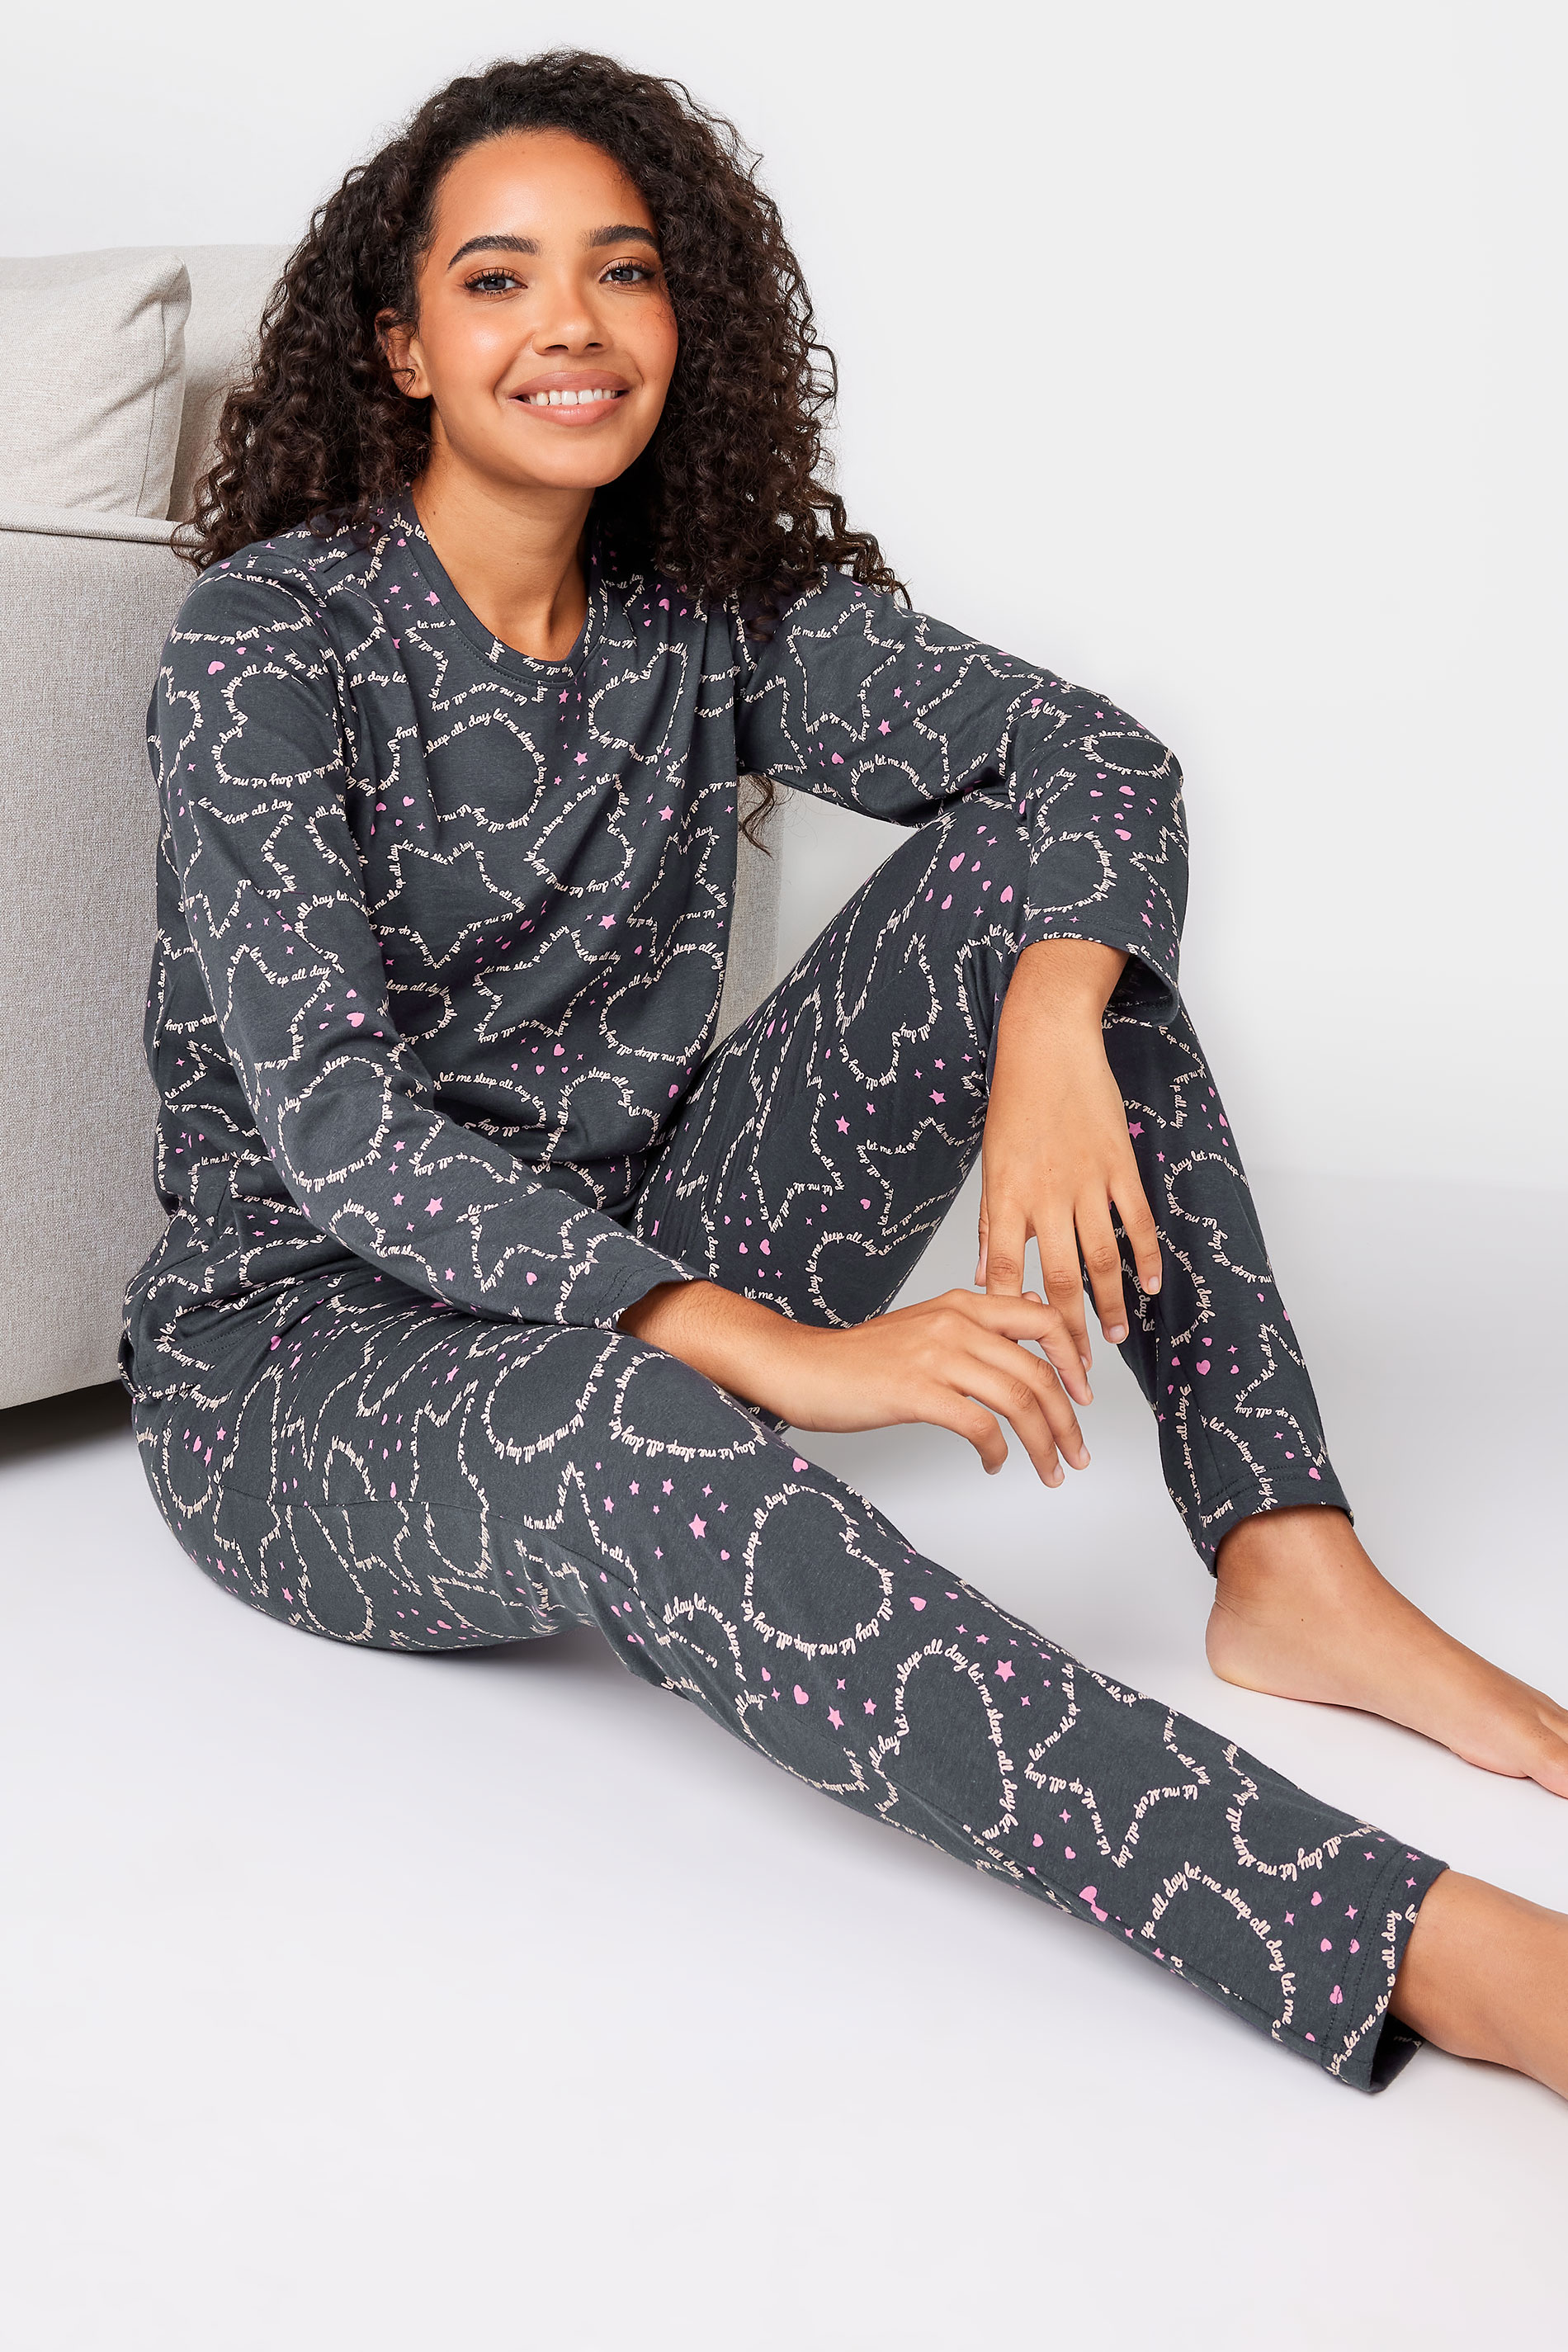 M&Co Grey Cotton 'Sleep All Day' Scripted Heart Print Pyjama Set | M&Co 1